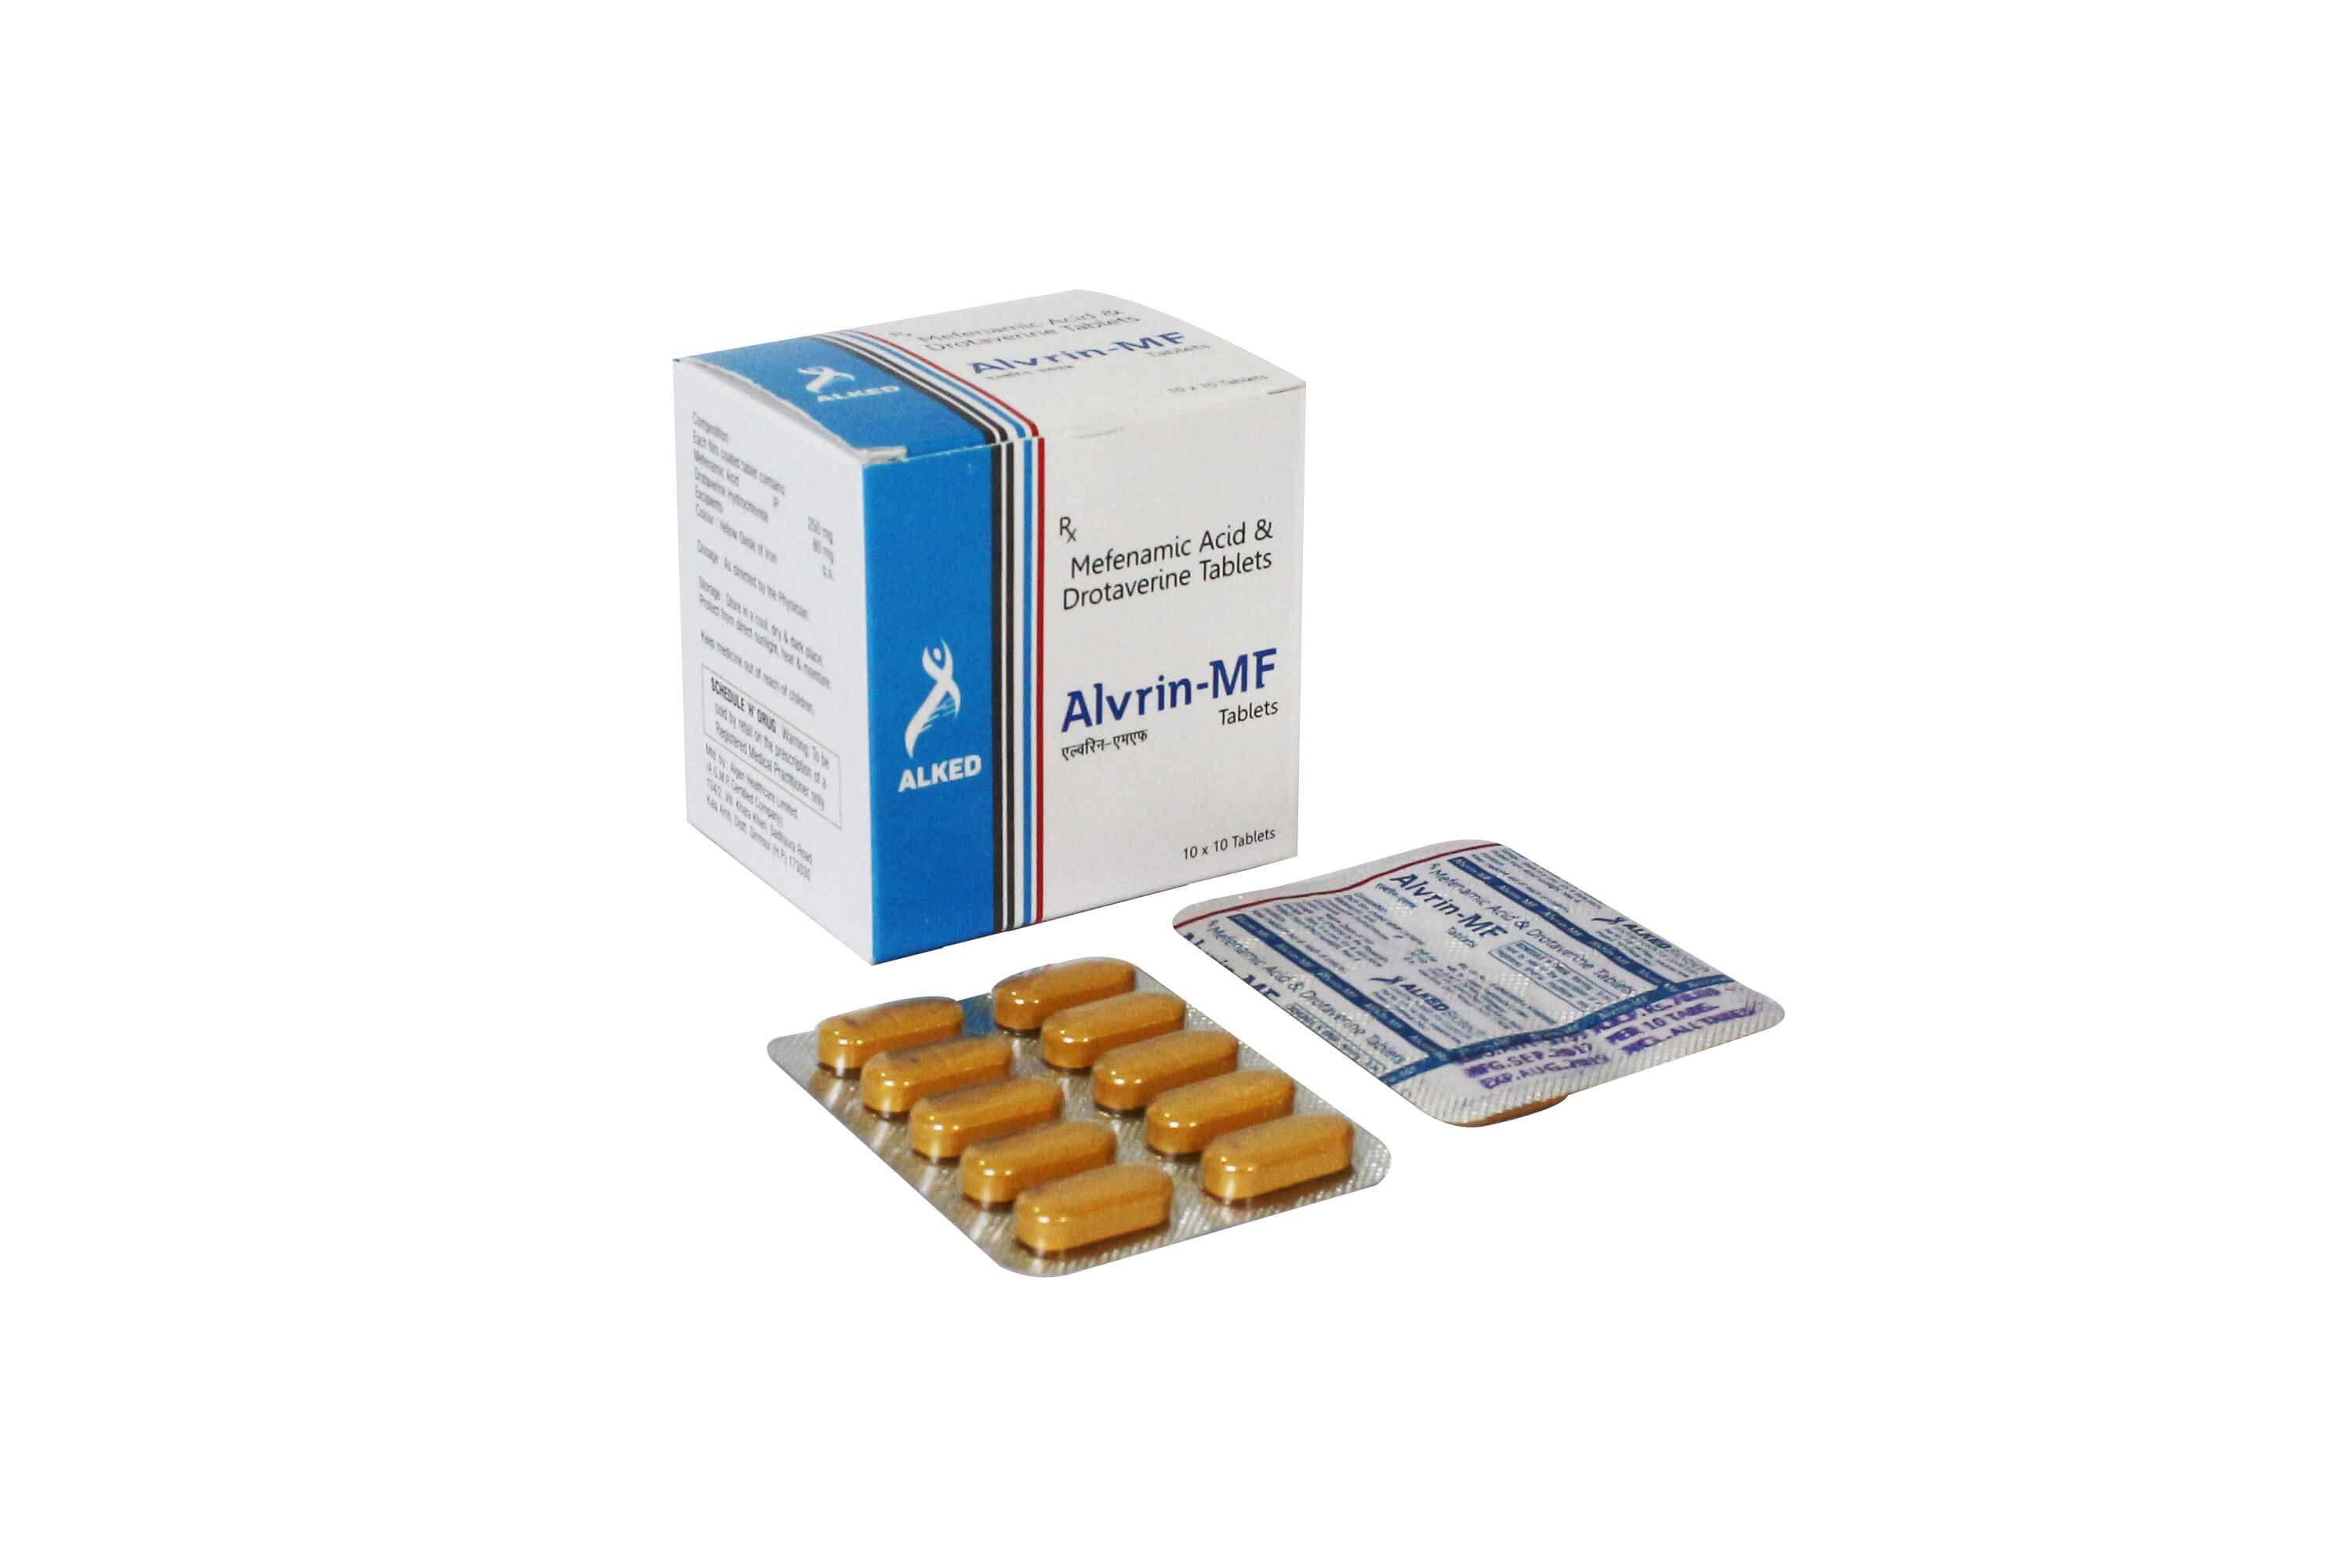 Product Name: Alvrin MF, Compositions of Alvrin MF are Mefenamic Acid & Drotaverine Tablets - Numantis Healthcare